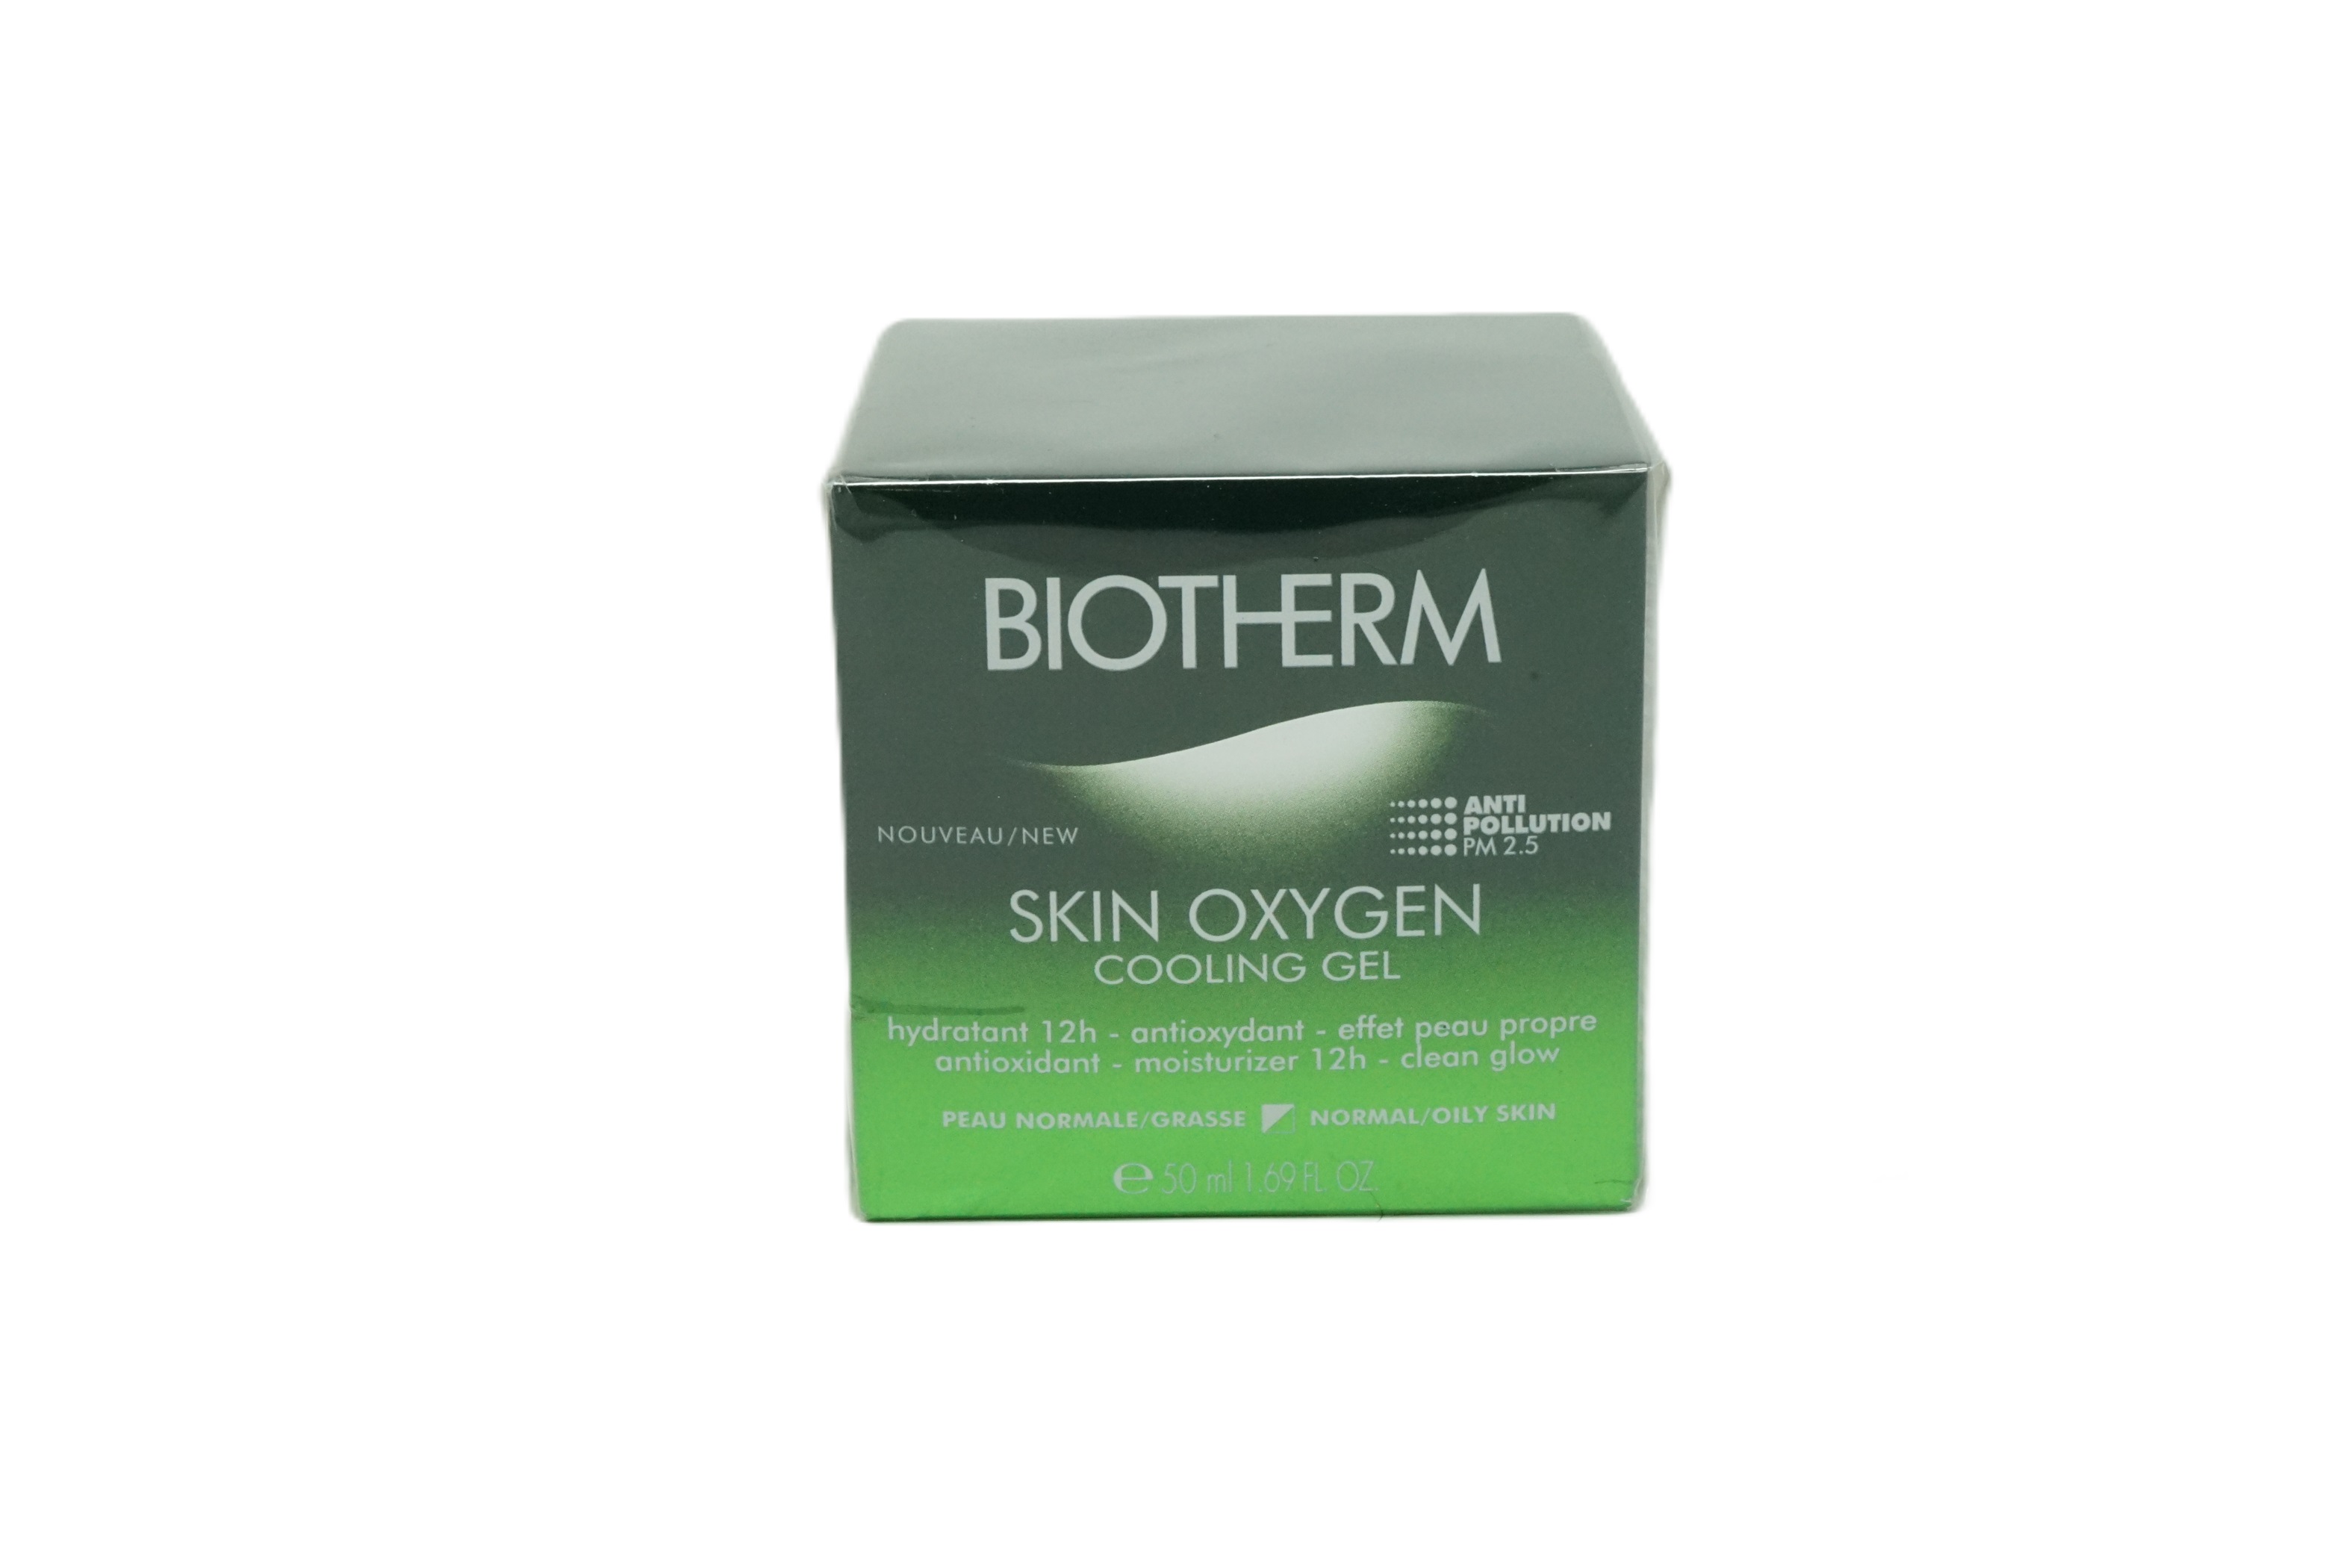 Biotherm Skin Oxygen Cooling Gel Clean Glow Noramel bis ölige Haut 50ml